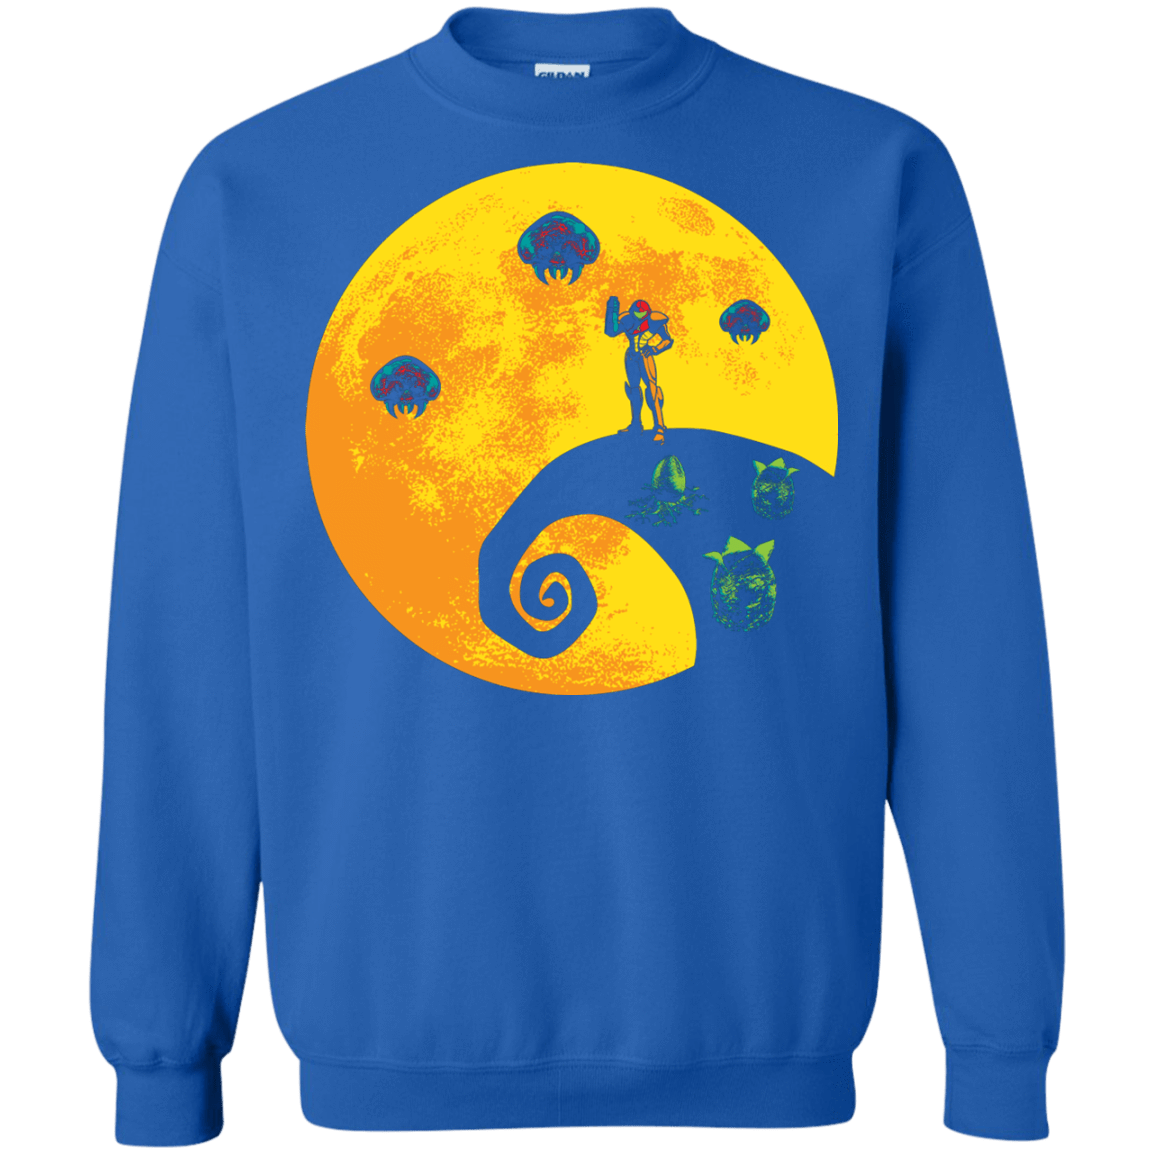 Sweatshirts Royal / S The Parasites Before Christmas Crewneck Sweatshirt